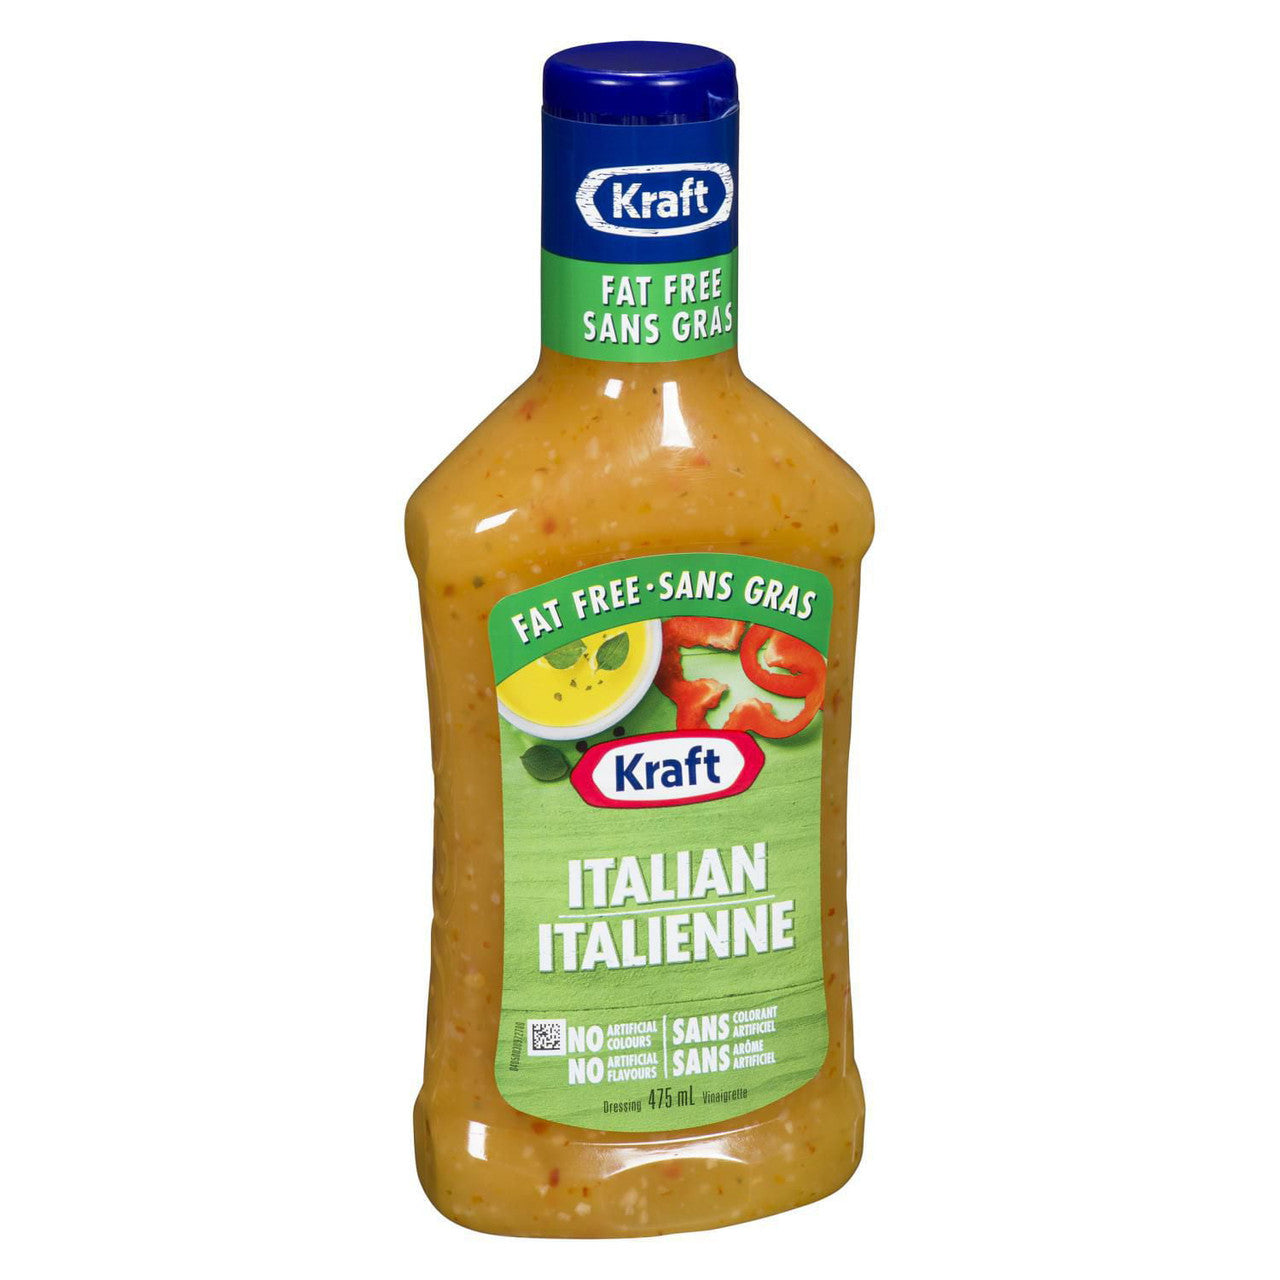 Kraft Fat Free Italian Dressing, 475mL/16 fl. oz., Bottle, {Imported from Canada}